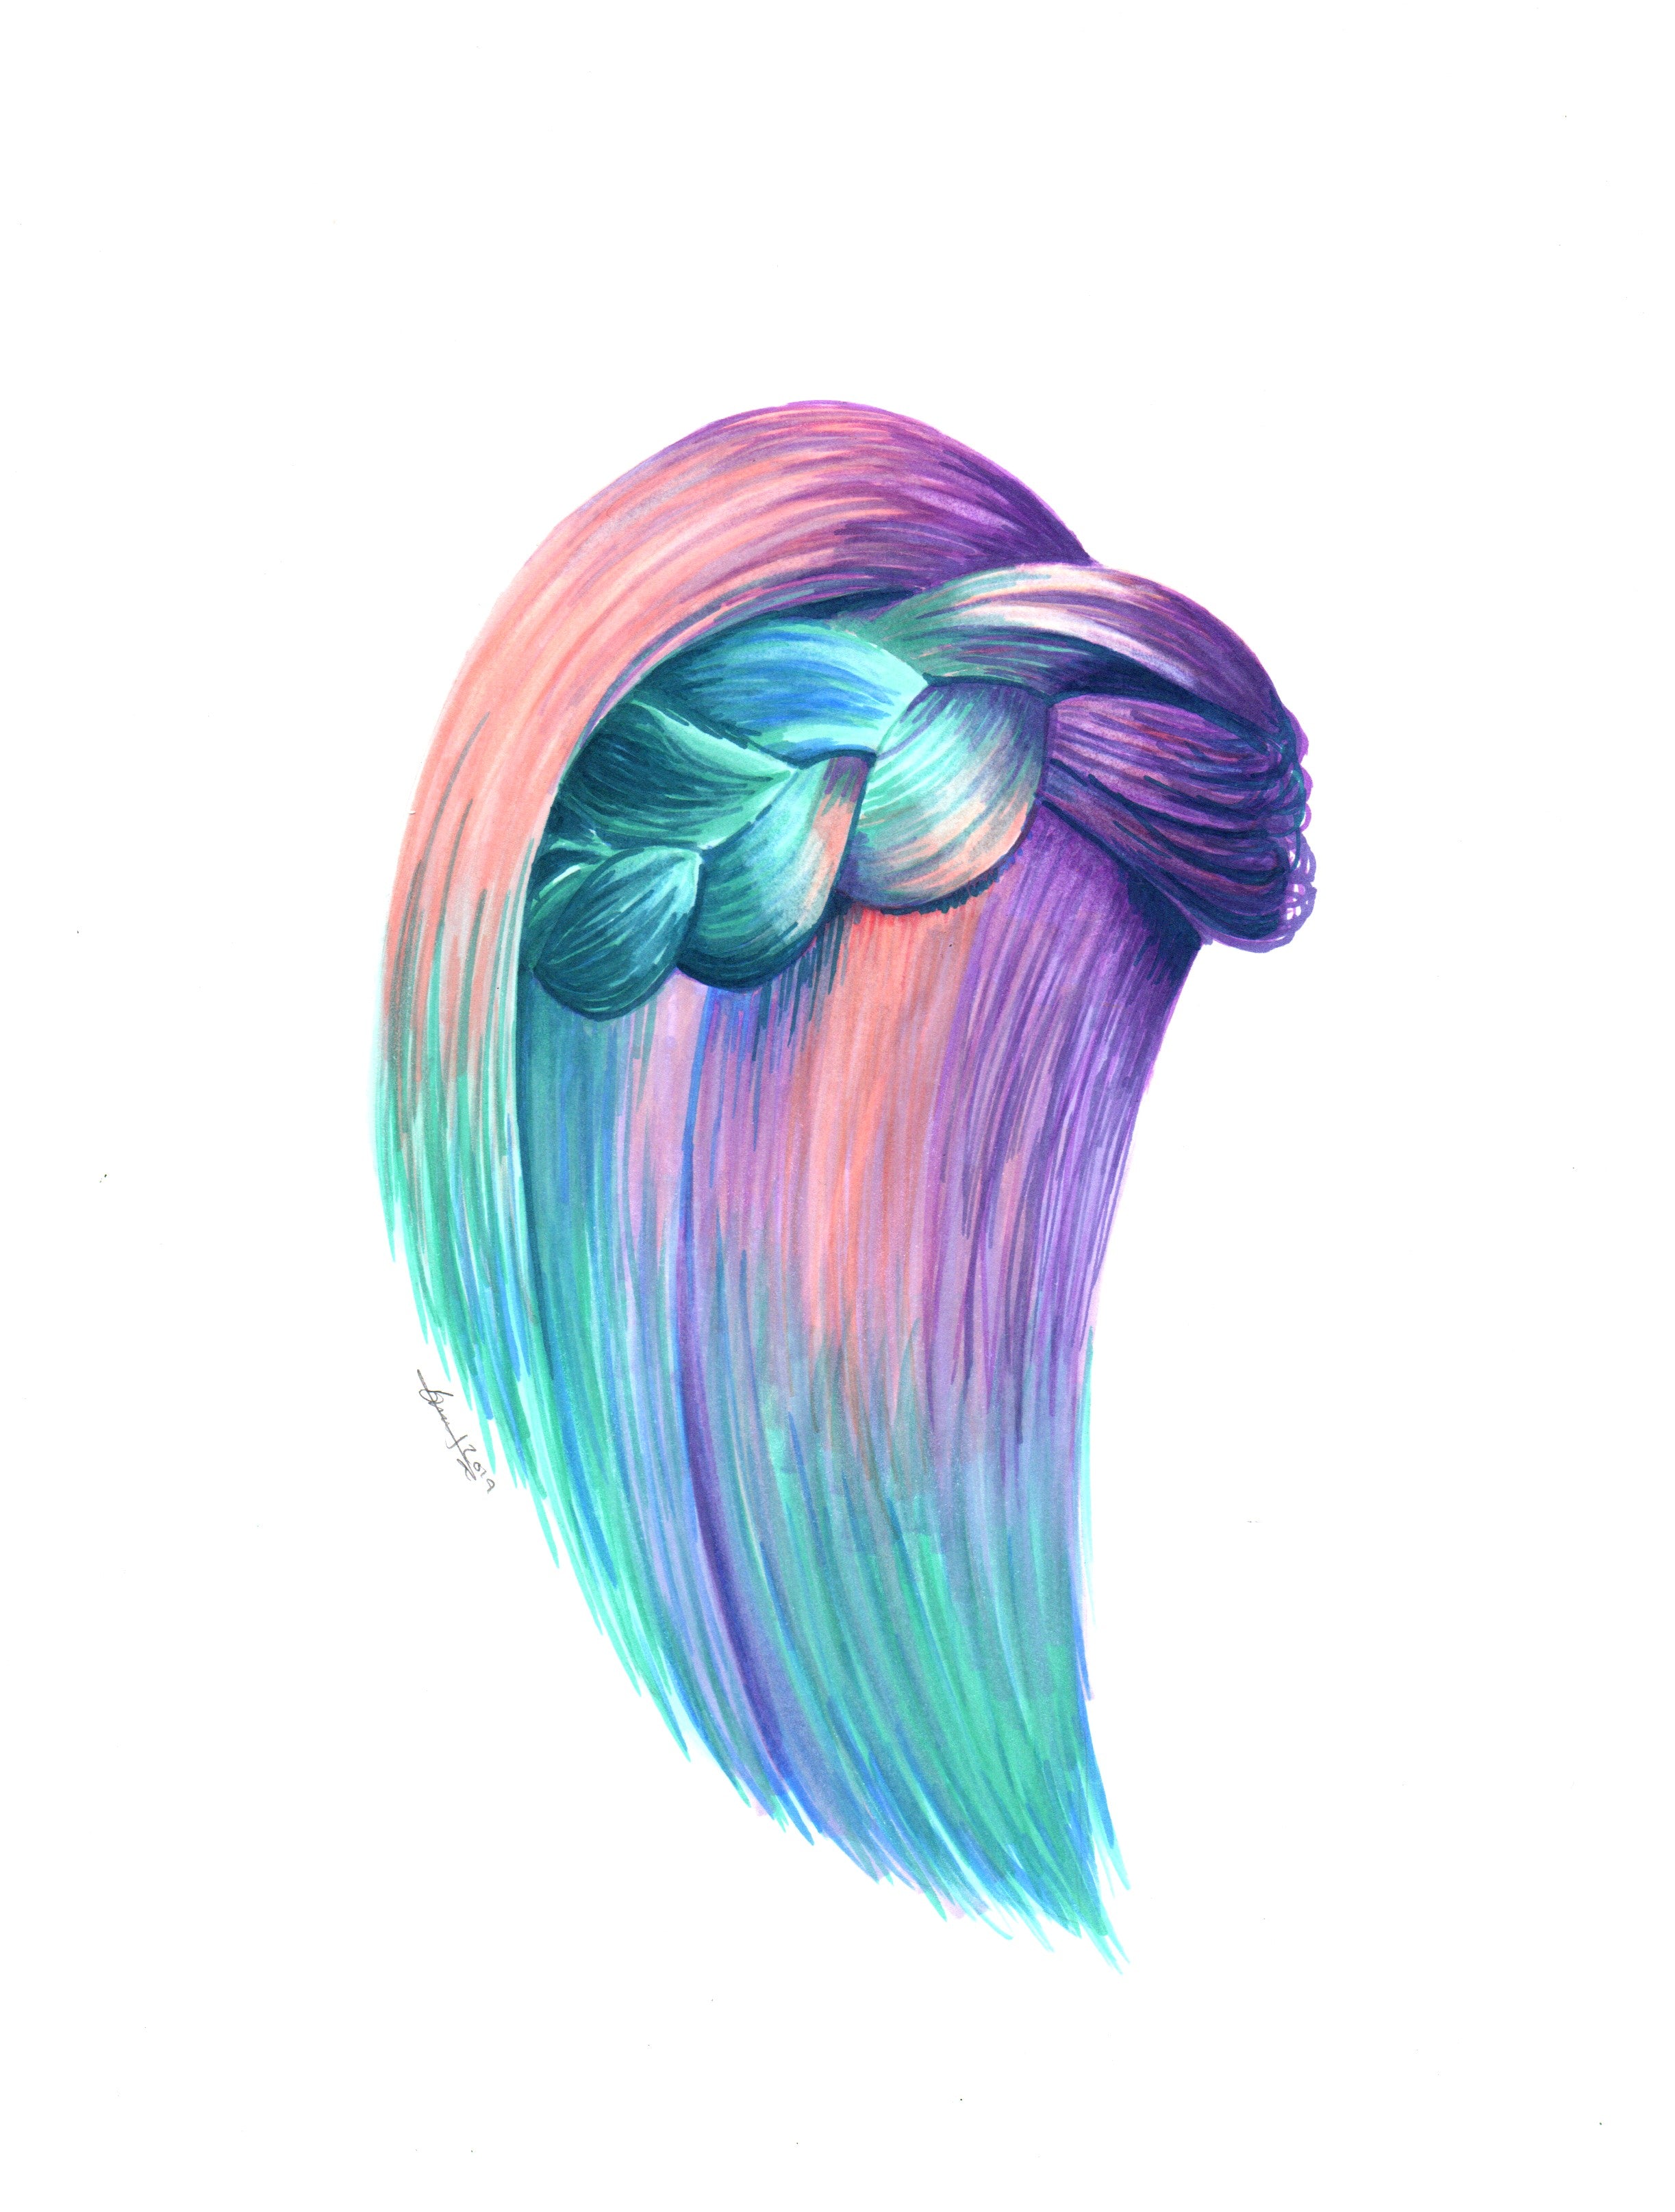 6. Marker drawing of braided pastel fantasy hair